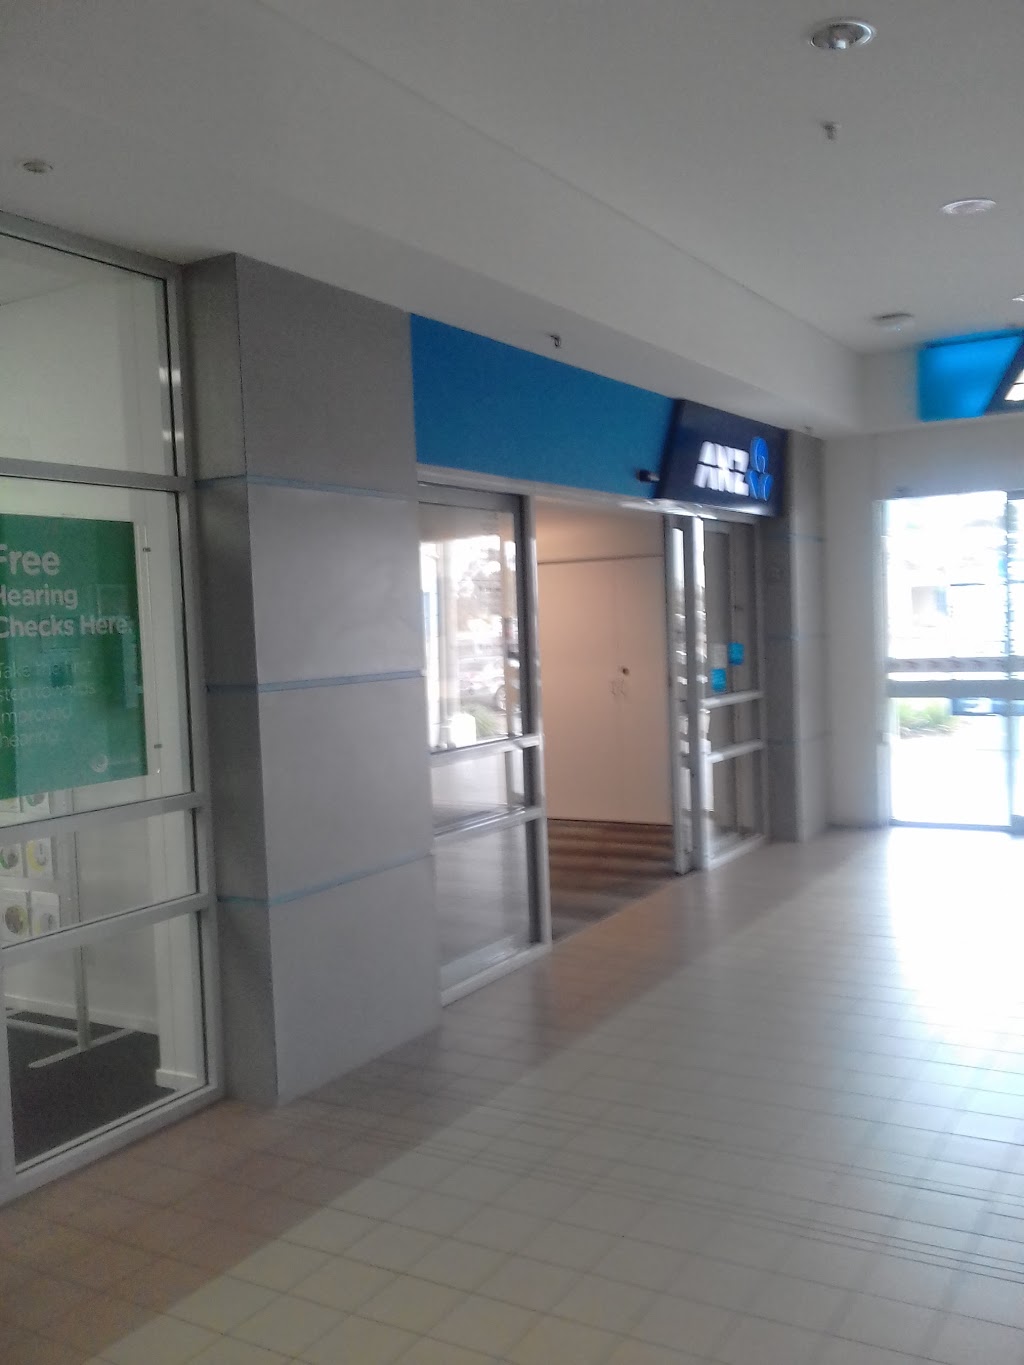 ANZ ATM Brandon Park (Smart) | Brandon Park Centro Shop, 54 Ferntree Gully Rd, Wheelers Hill VIC 3170, Australia | Phone: 13 13 14